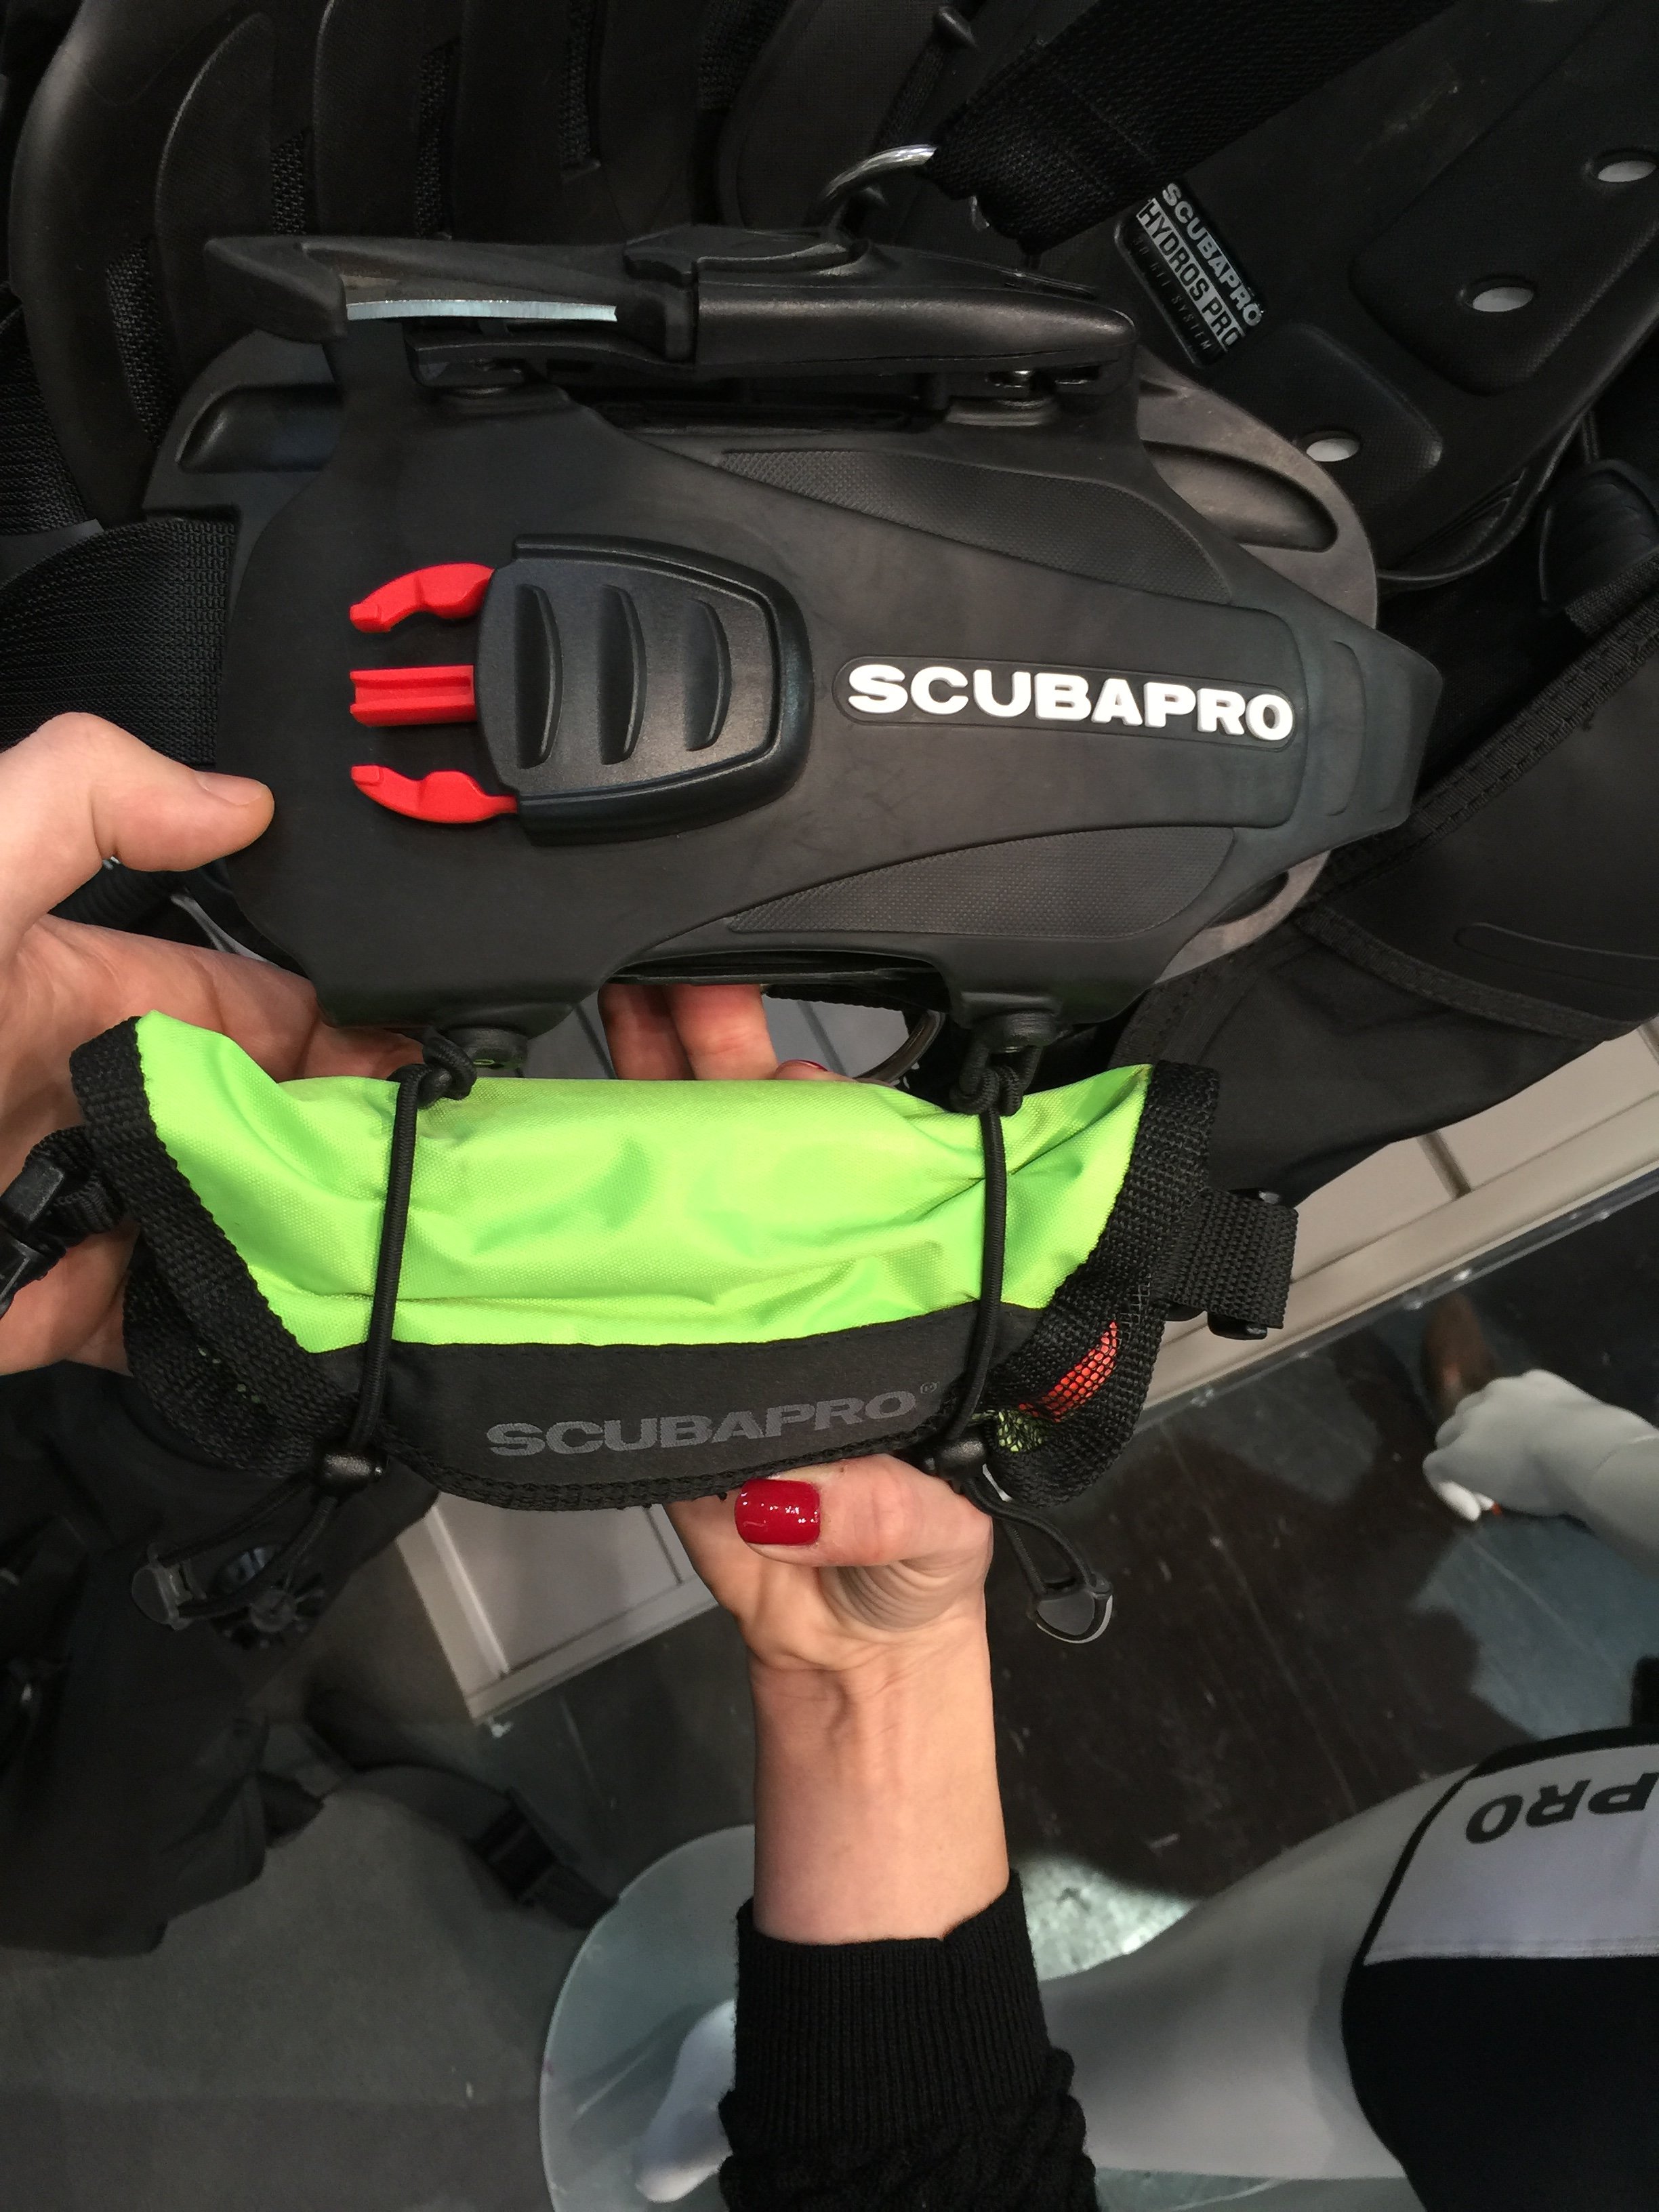 scubapro hydros pro bcd review